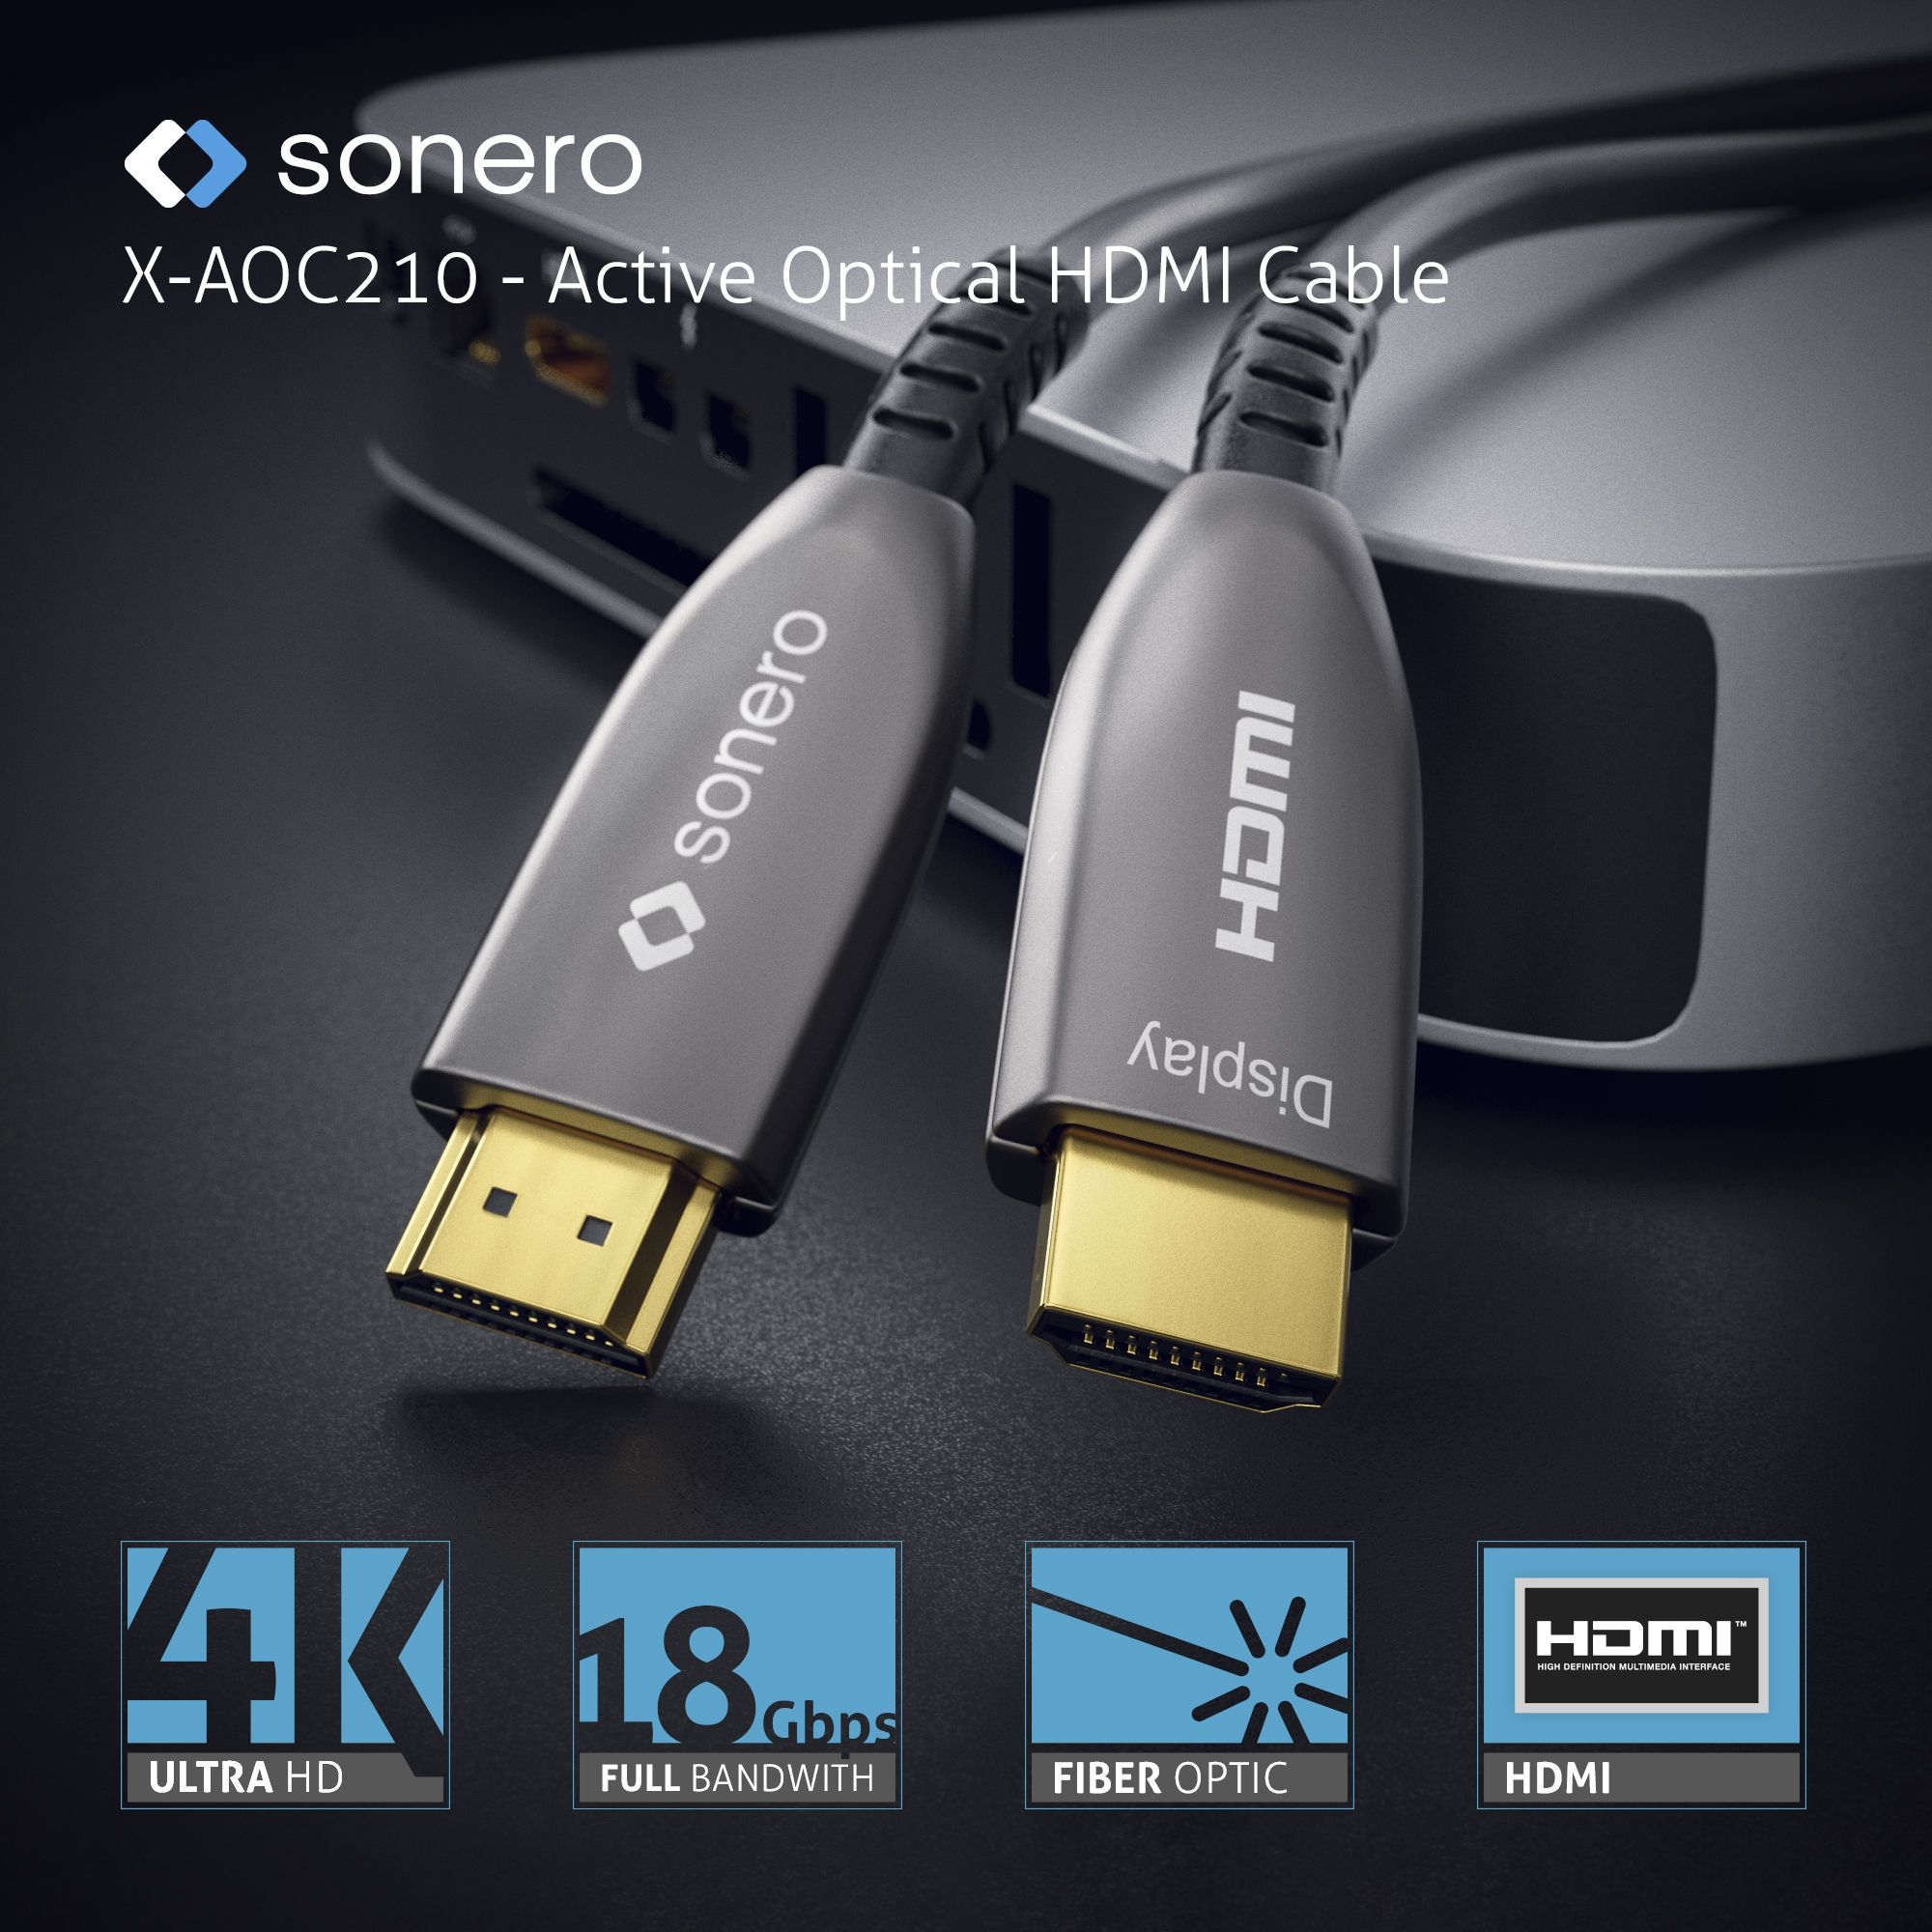 Sonero X-AOC210-300 - HDMI 4K Fibre Optic Cable - 18 Gbps - 30.0m - Black